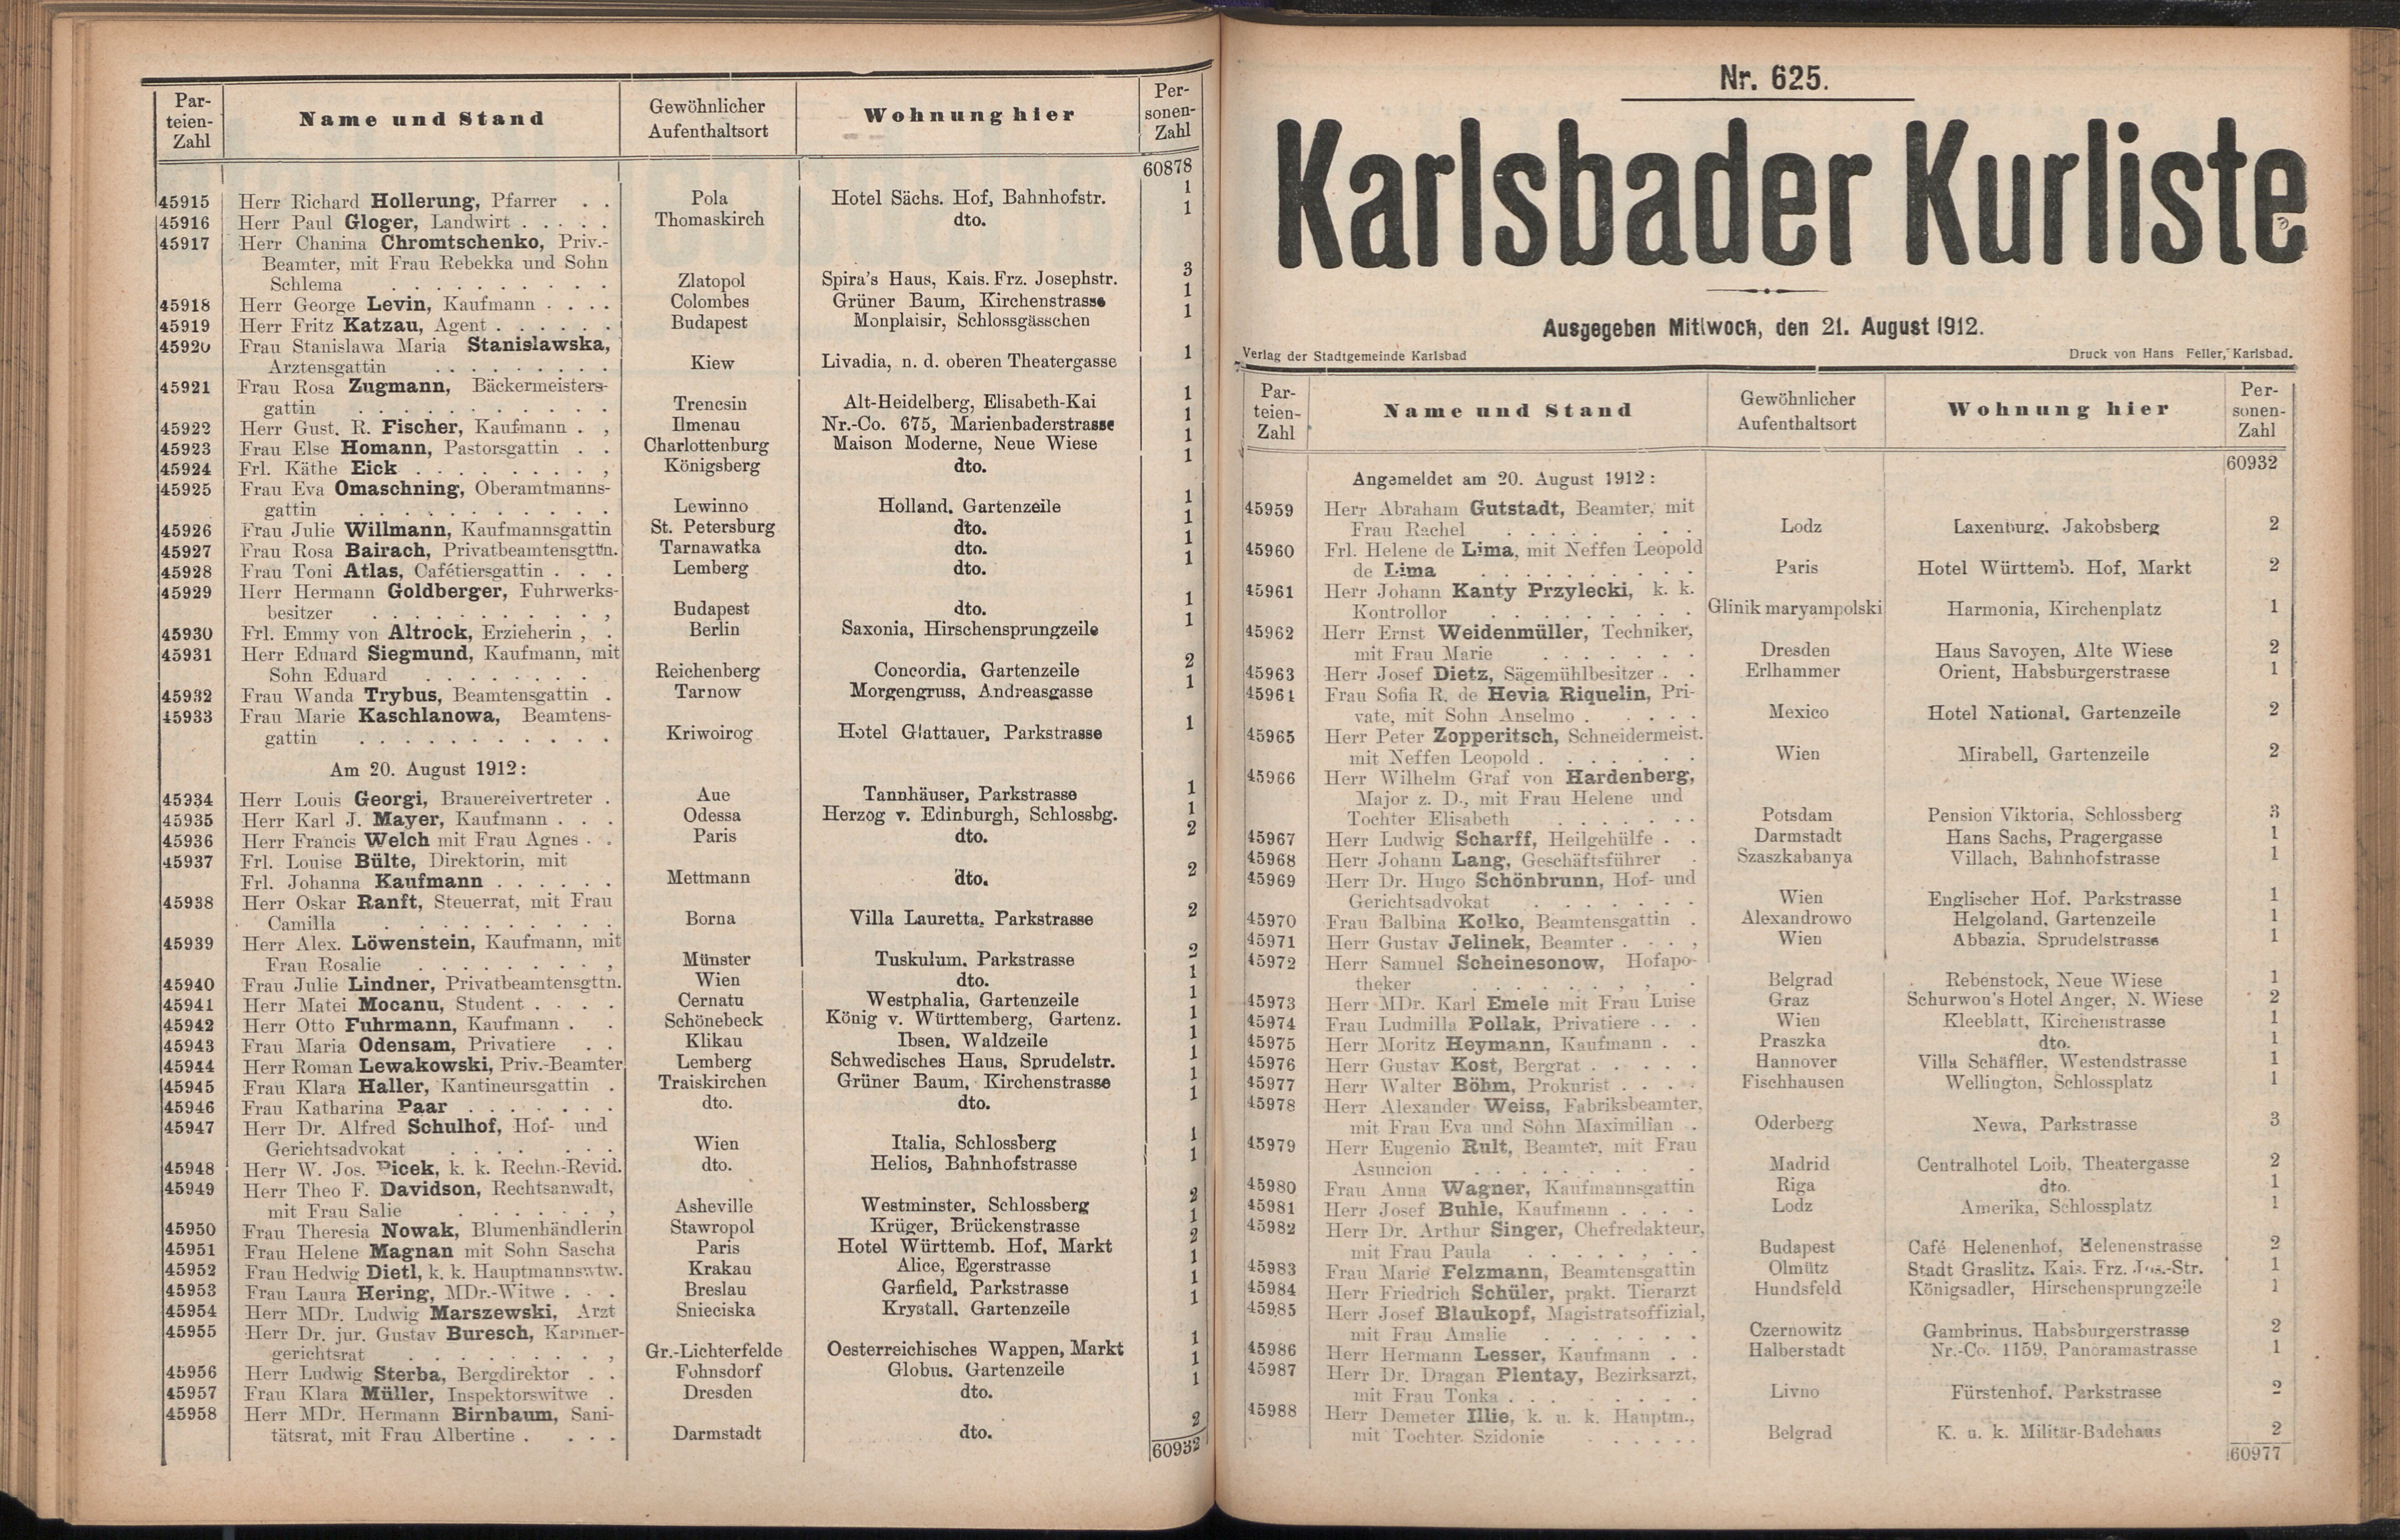 343. soap-kv_knihovna_karlsbader-kurliste-1912-2_3430